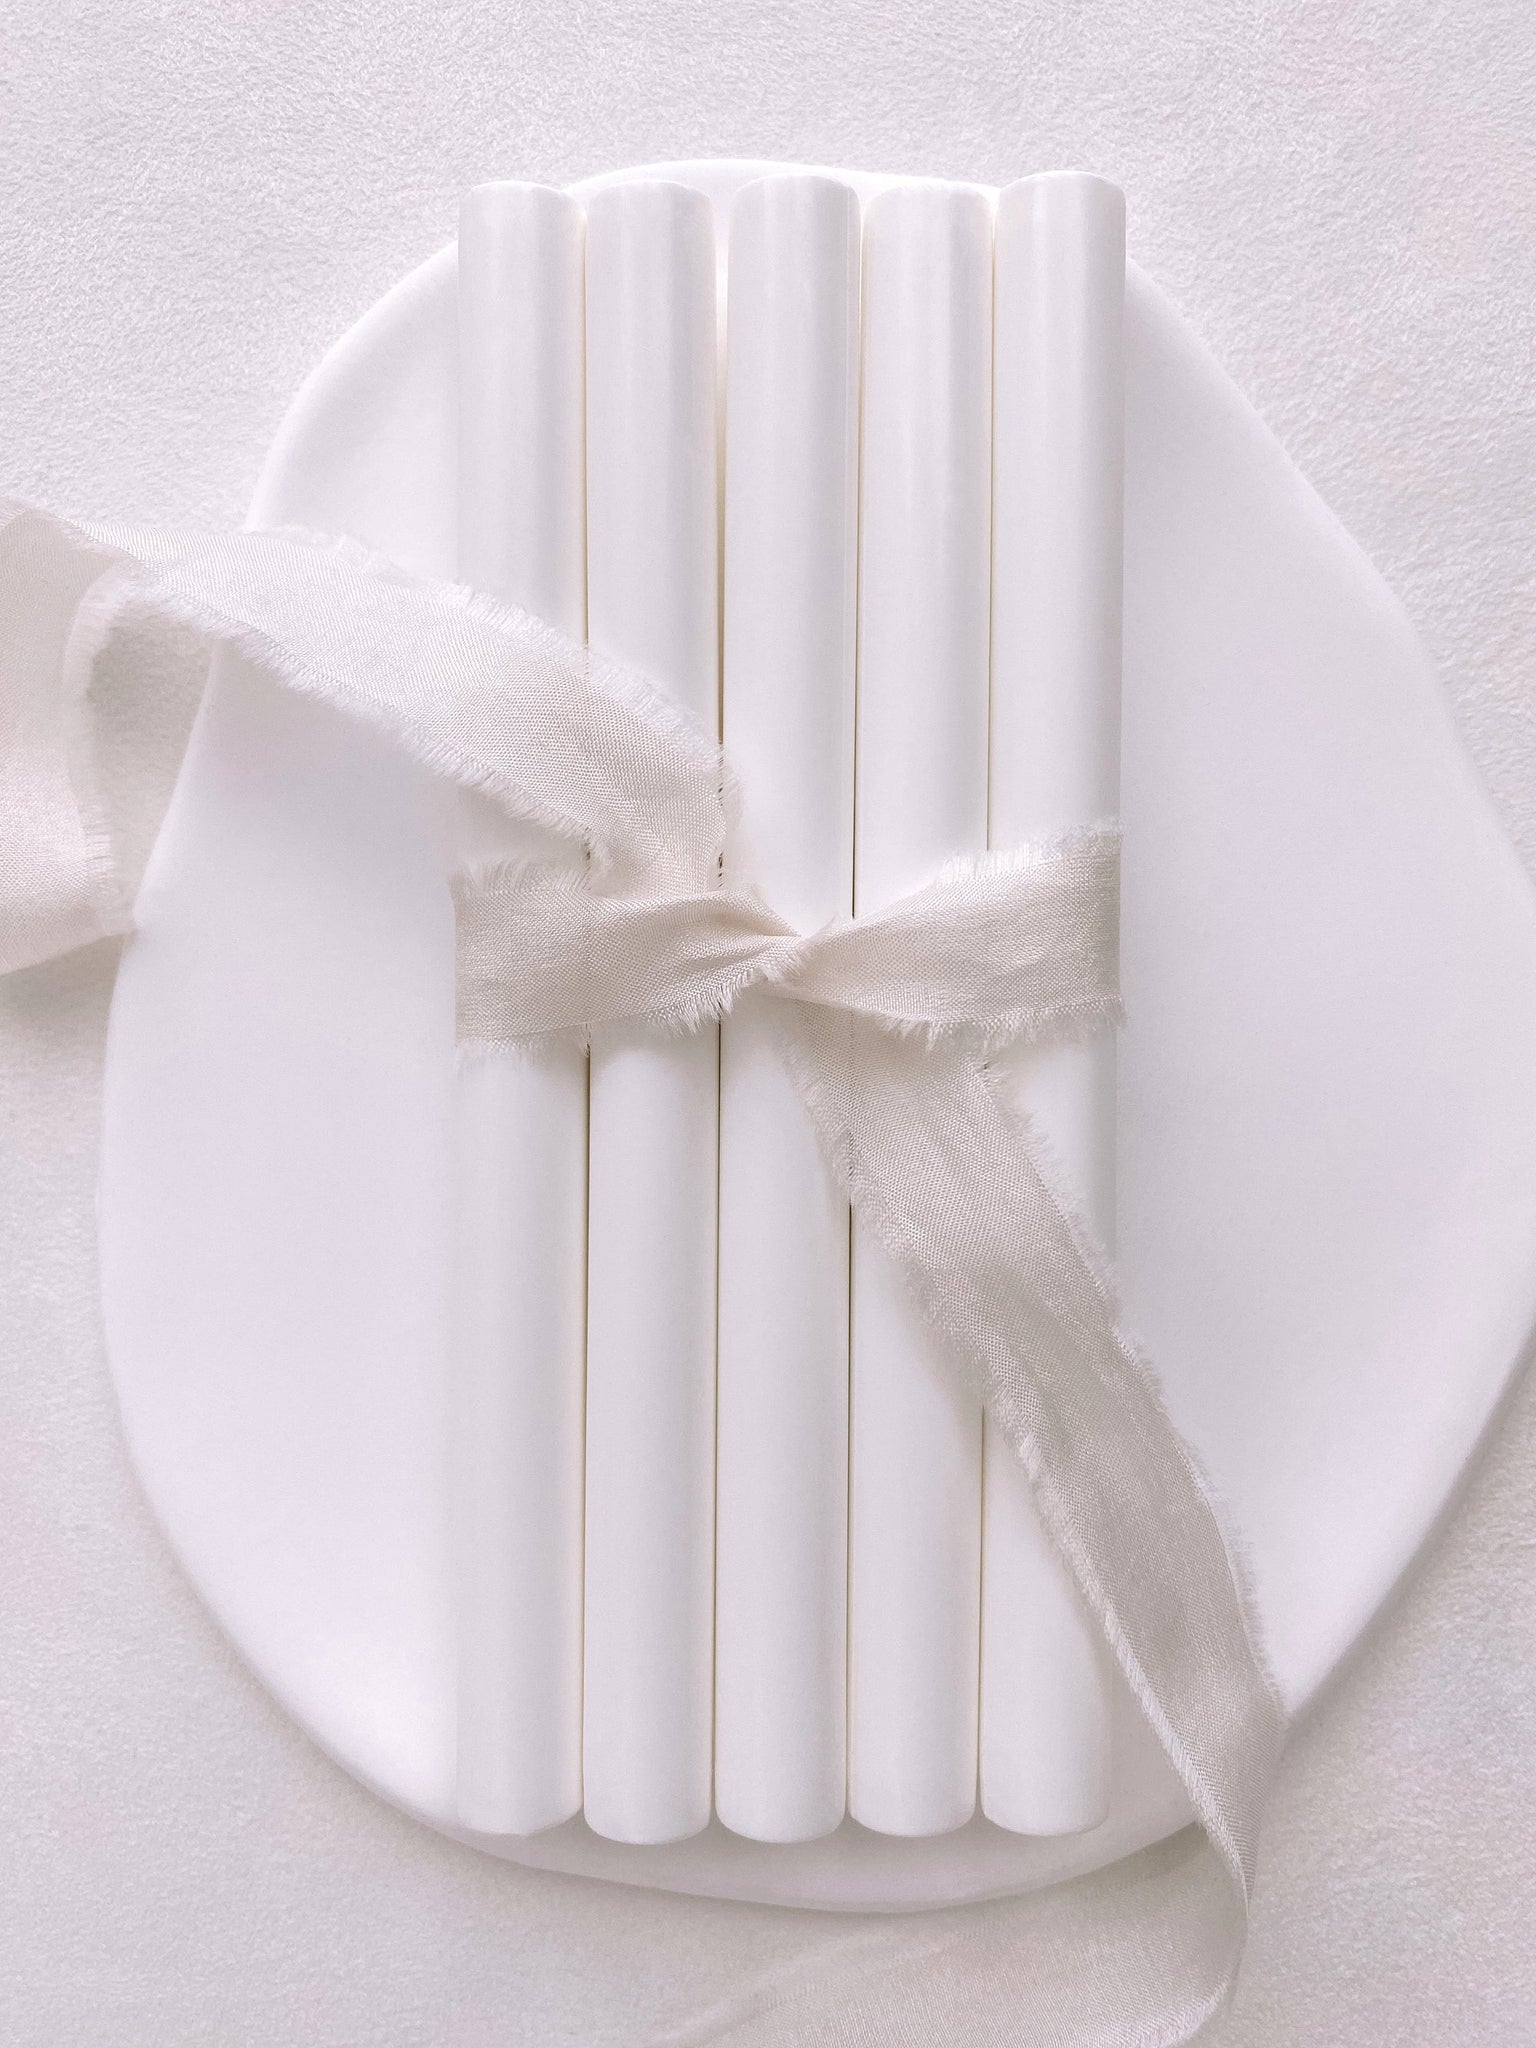 a set of 5 soft white sealing wax sticks